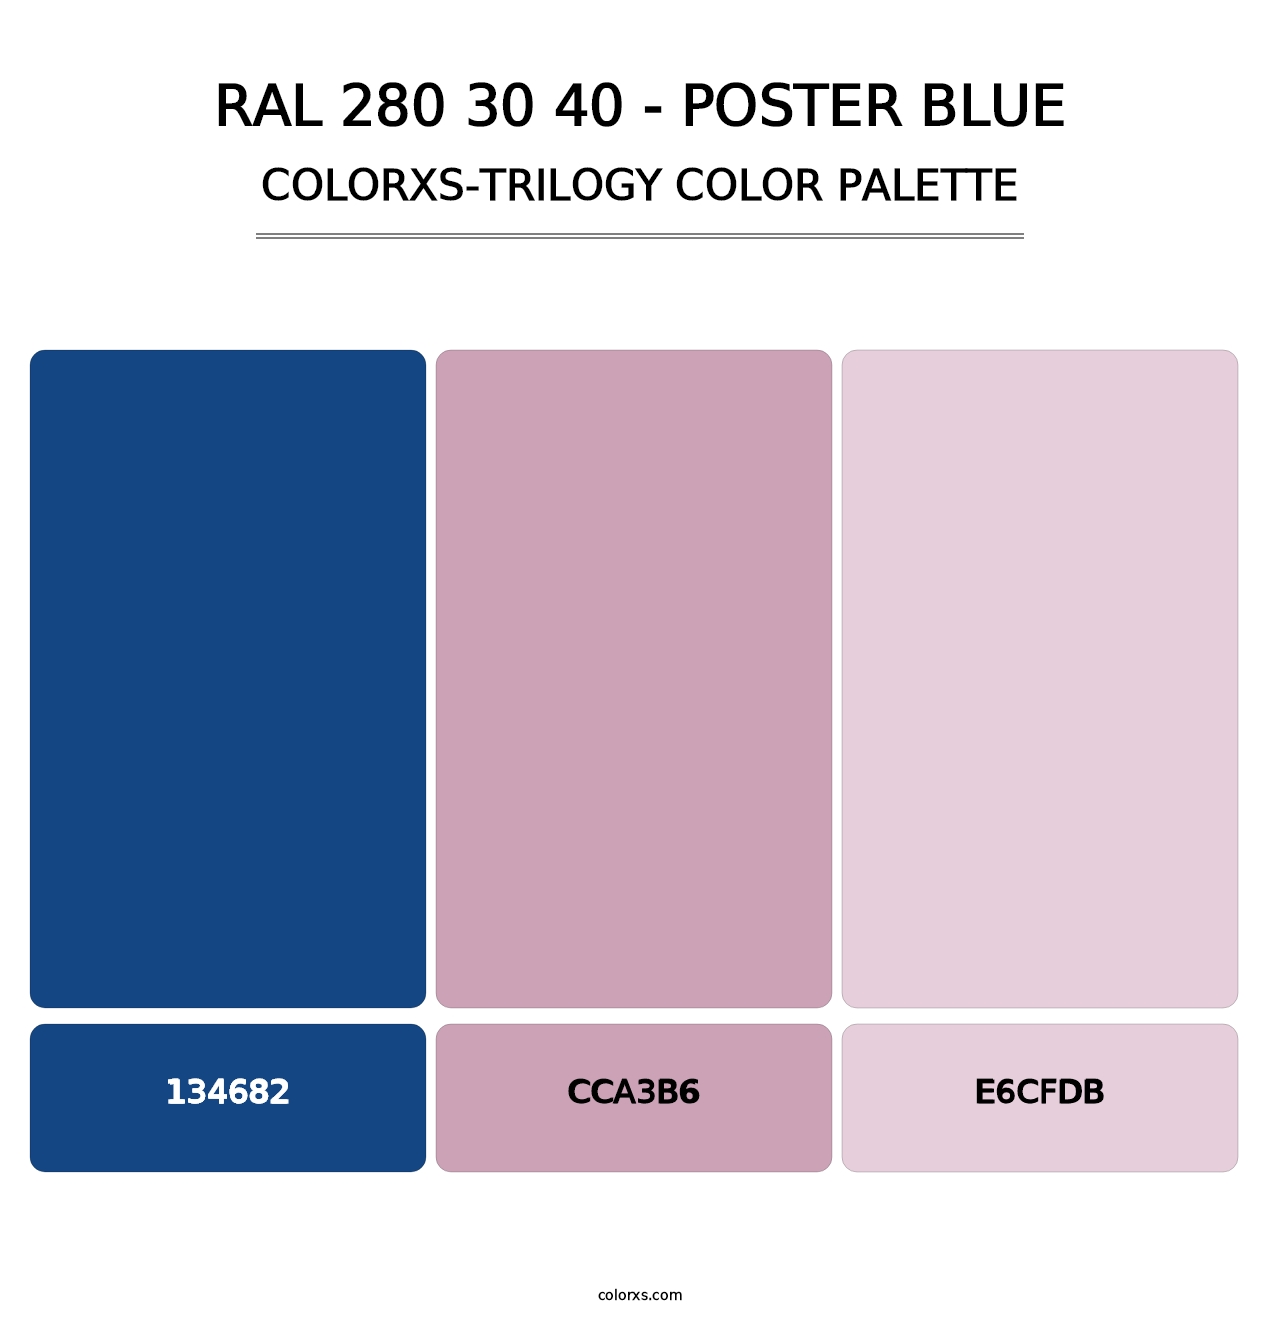 RAL 280 30 40 - Poster Blue - Colorxs Trilogy Palette